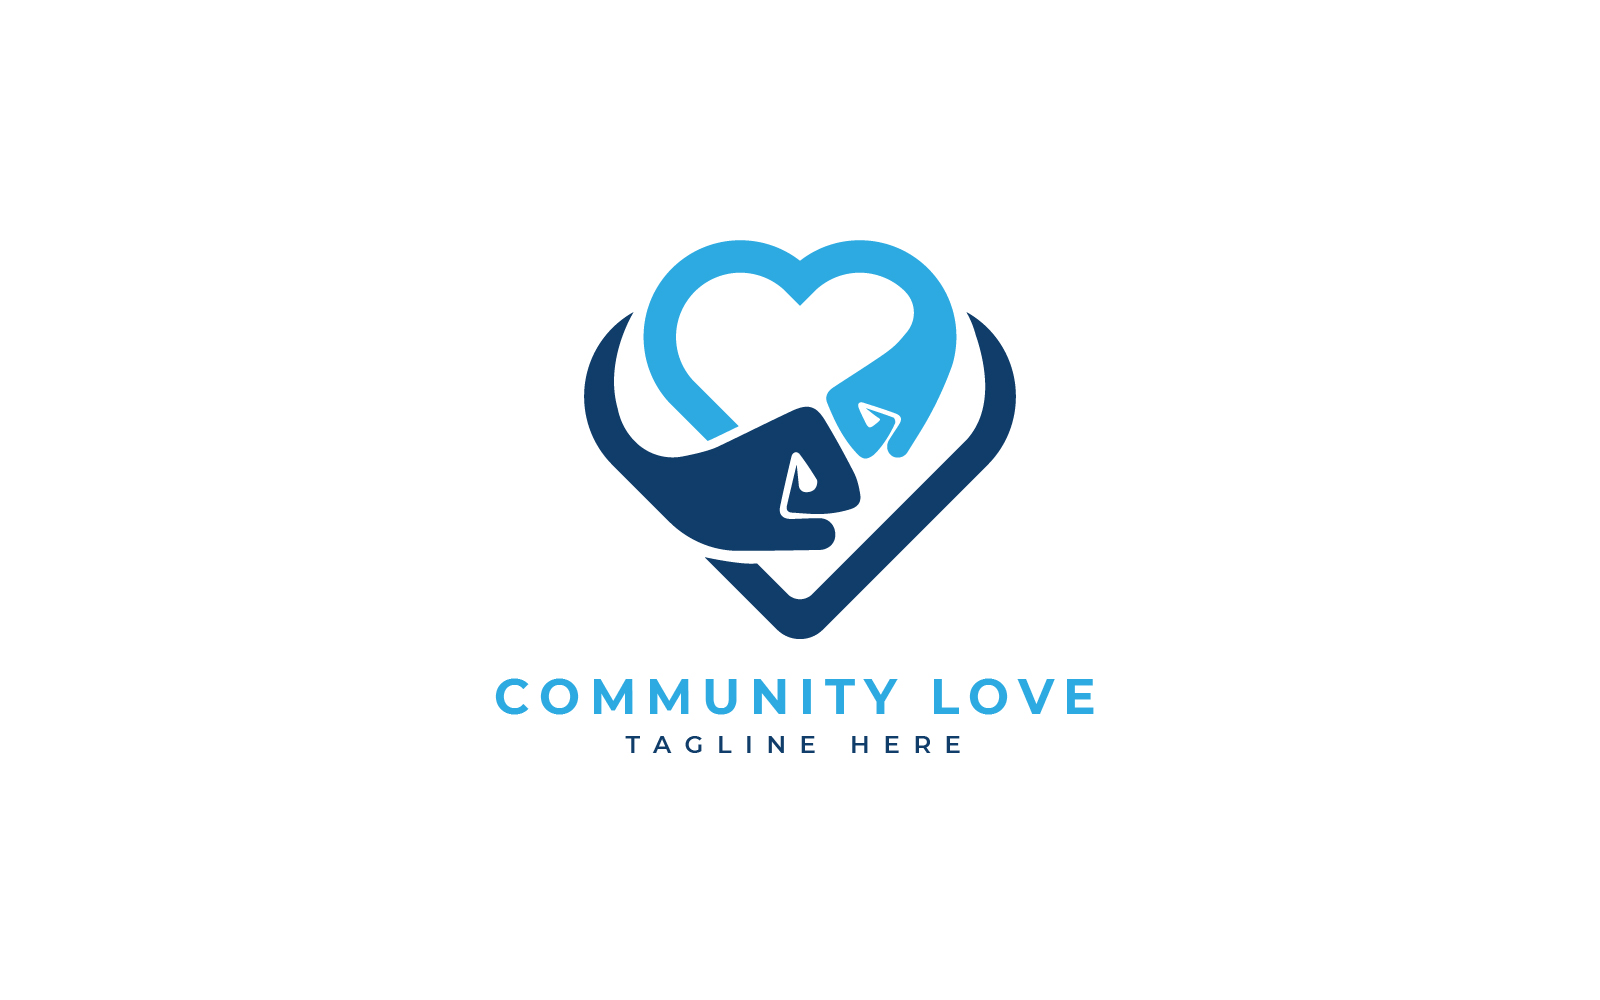 Community love logo design template